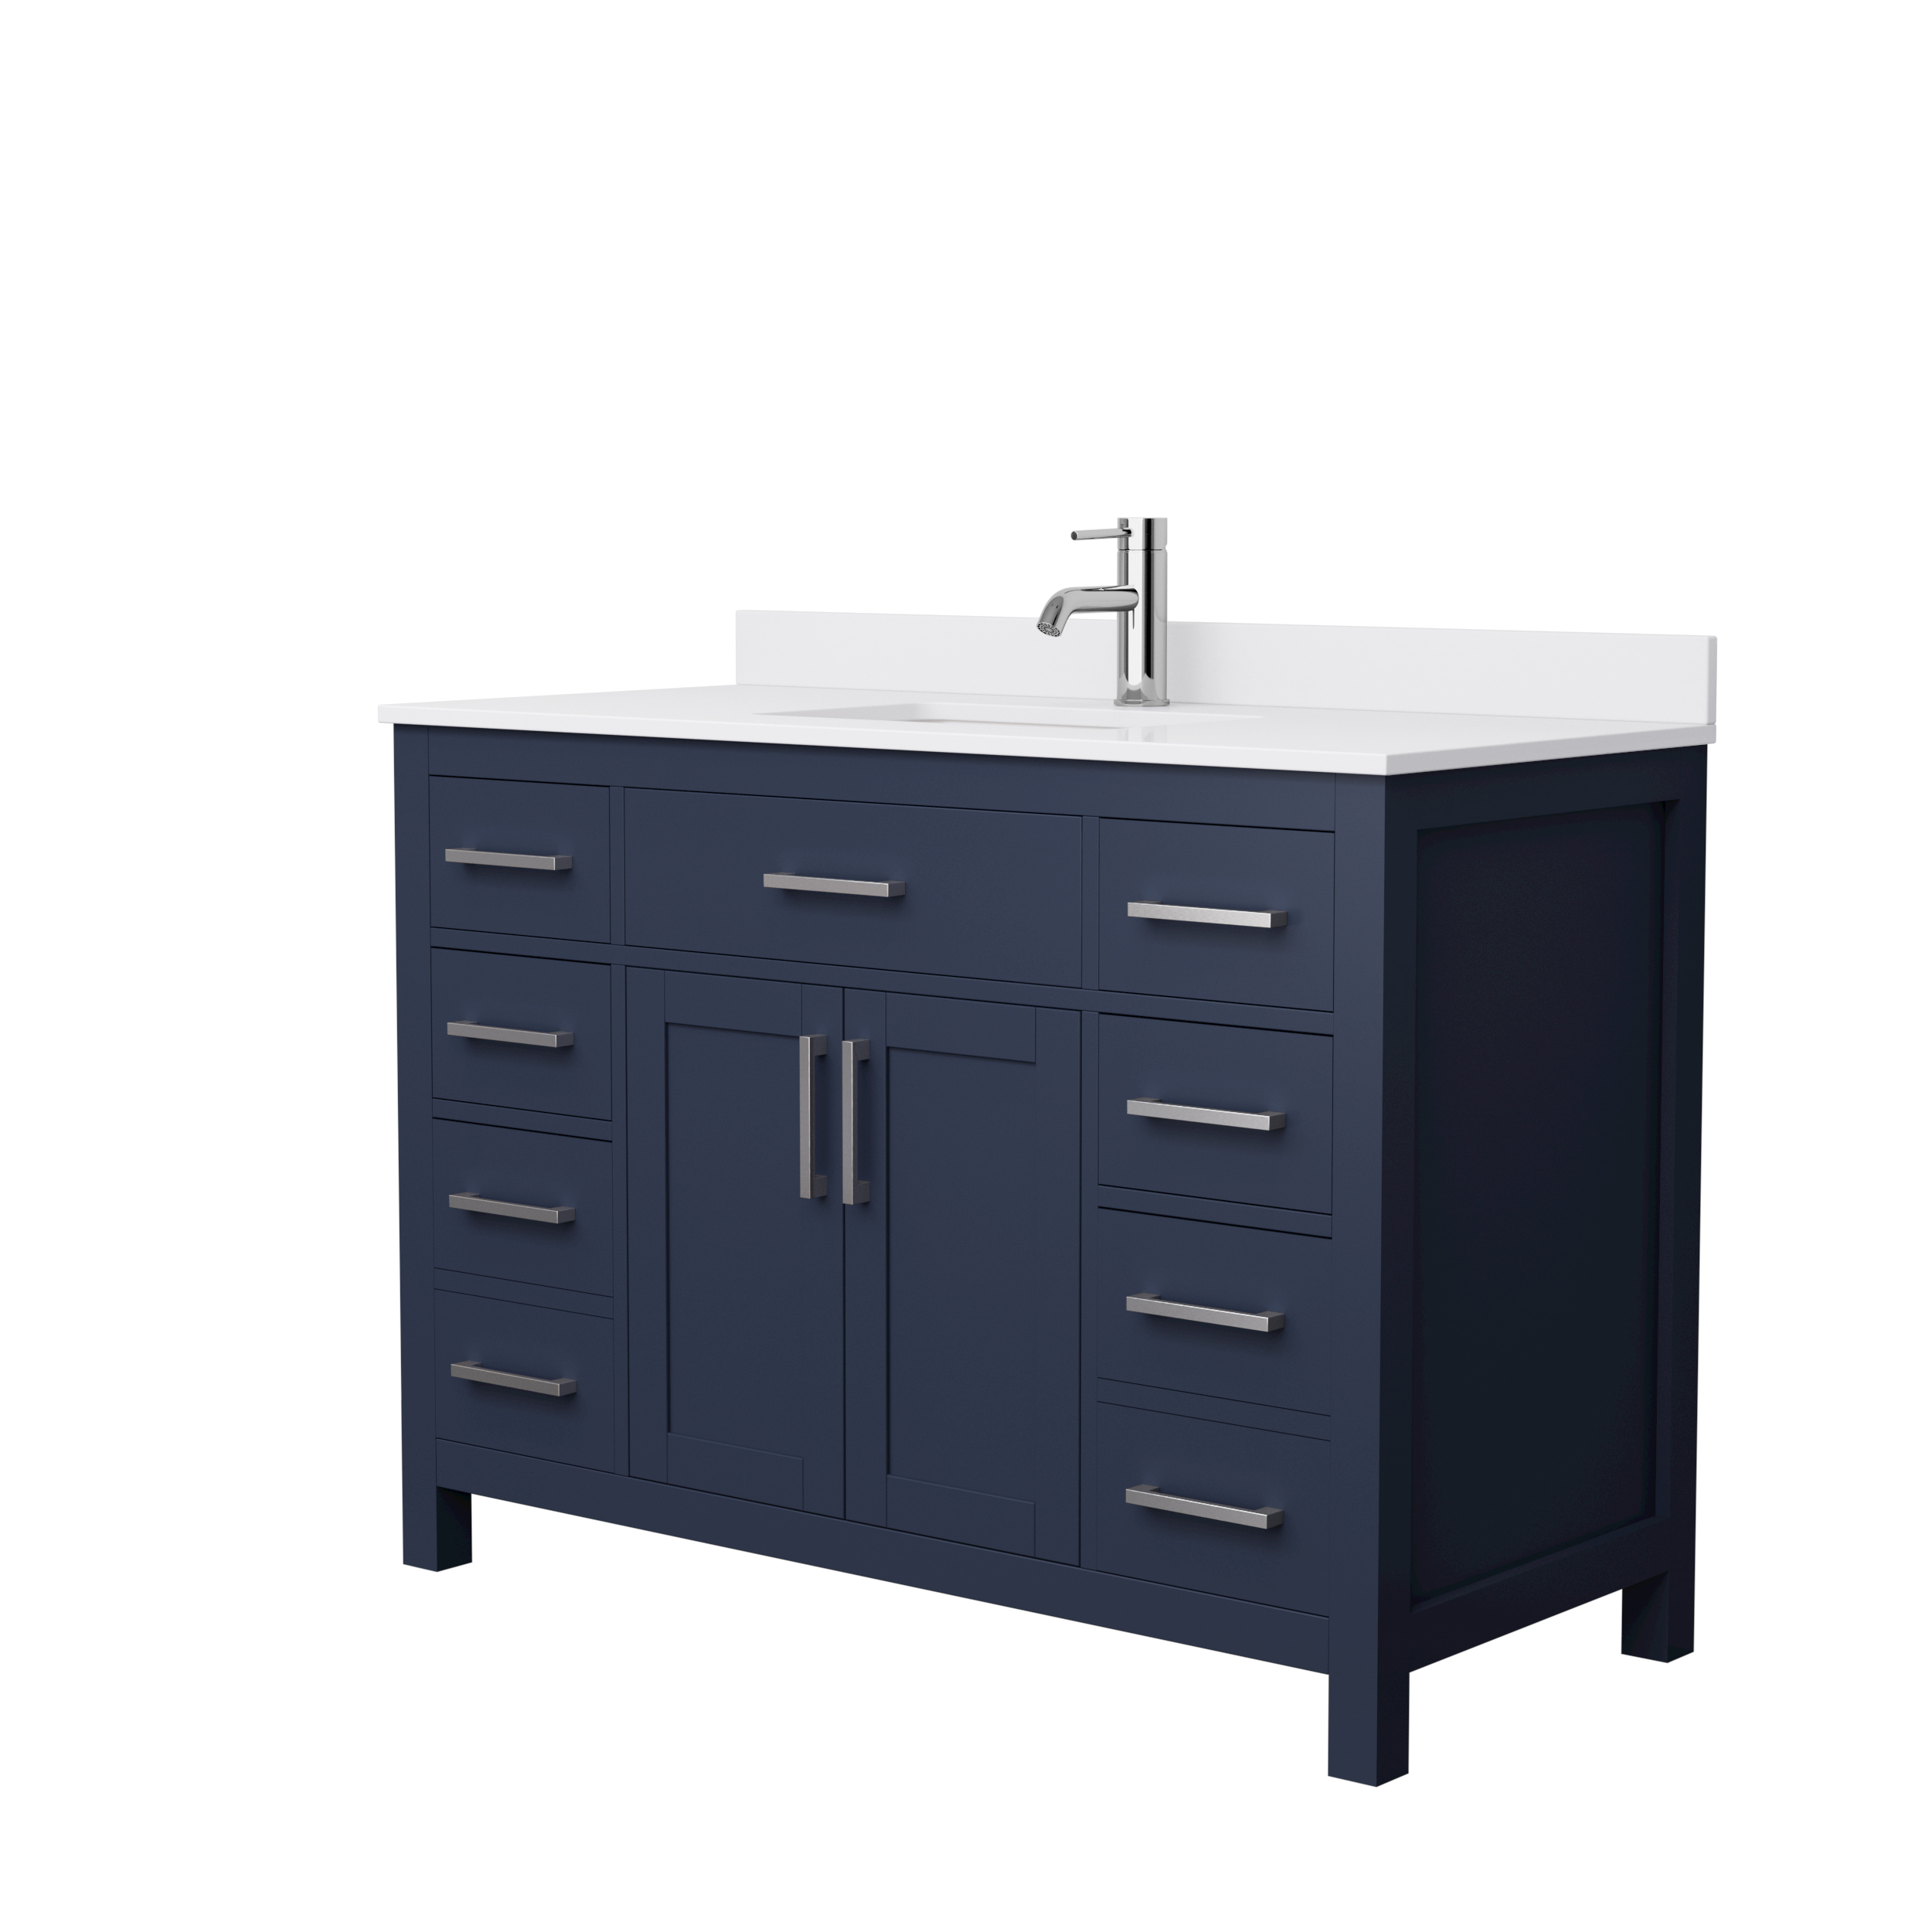 beckett 48" single bathroom vanity by wyndham collection - dark blue